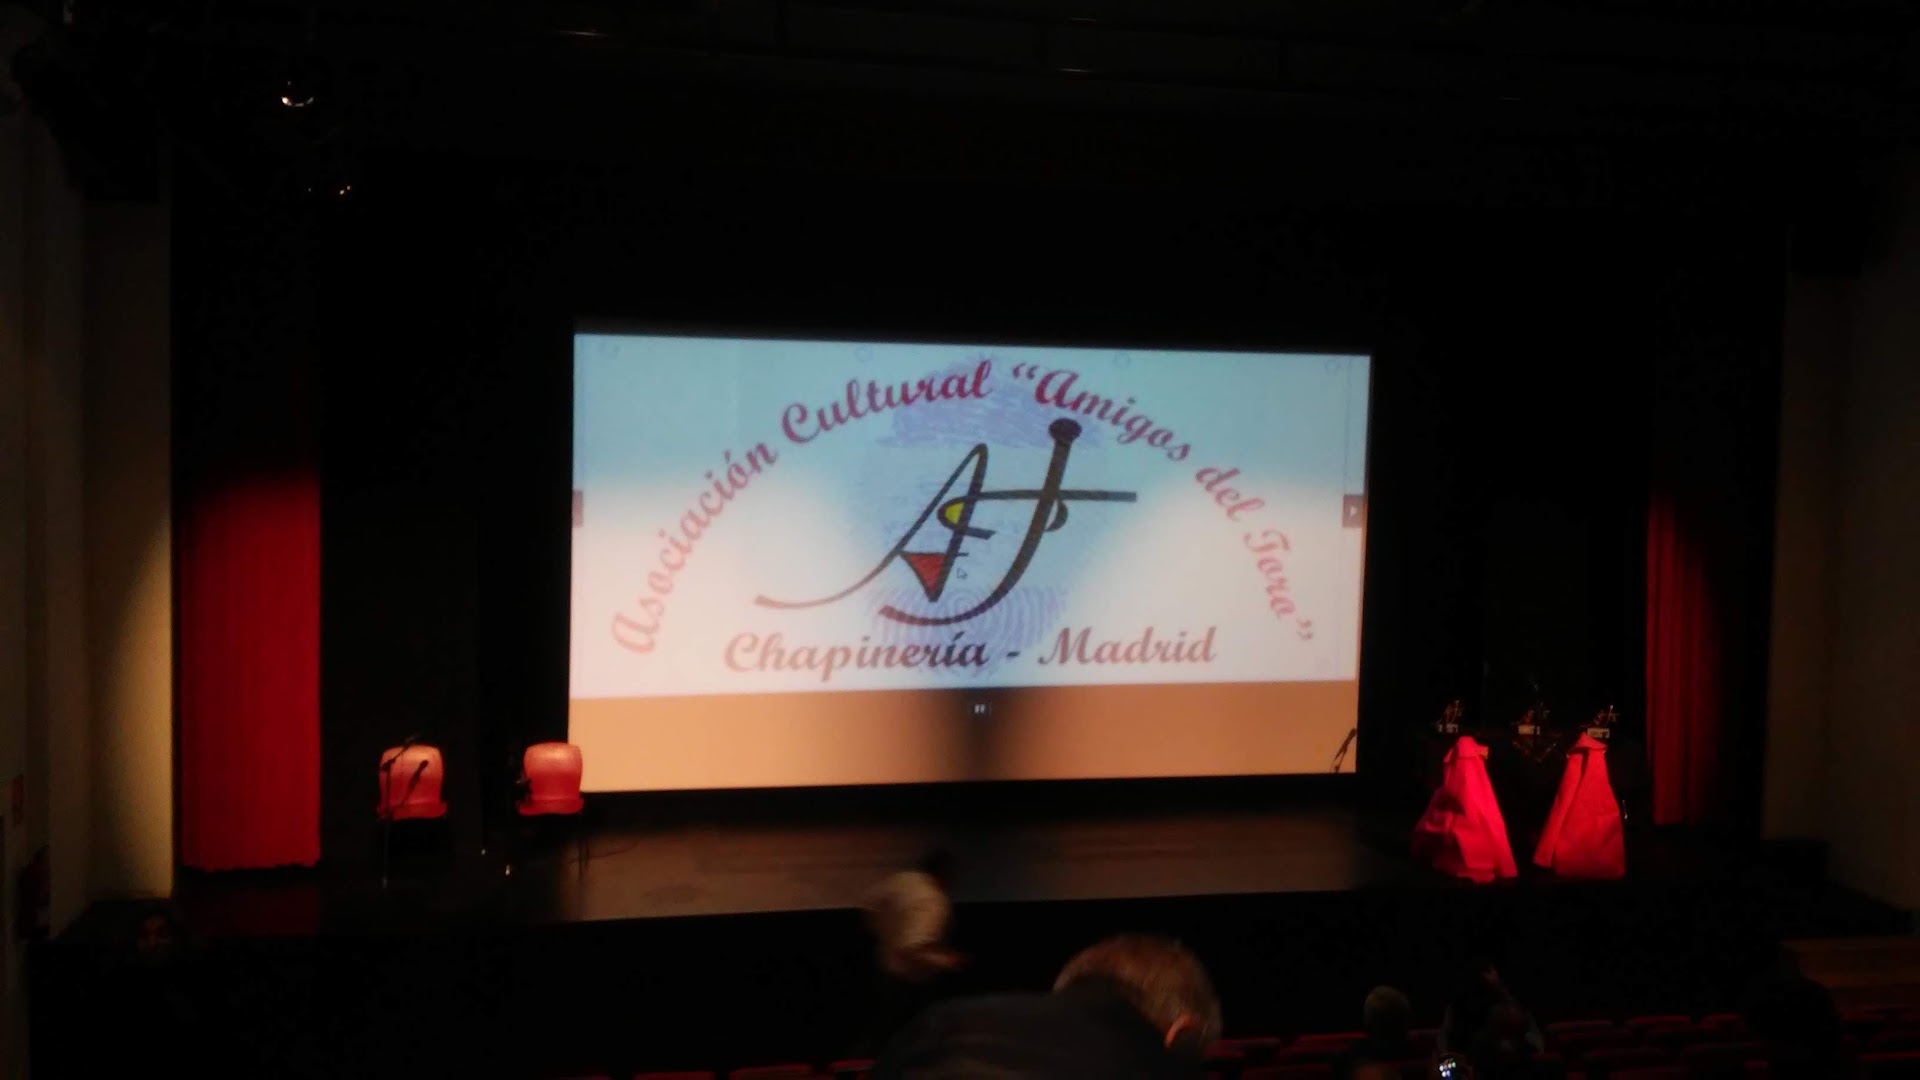 Auditorio De Chapineria